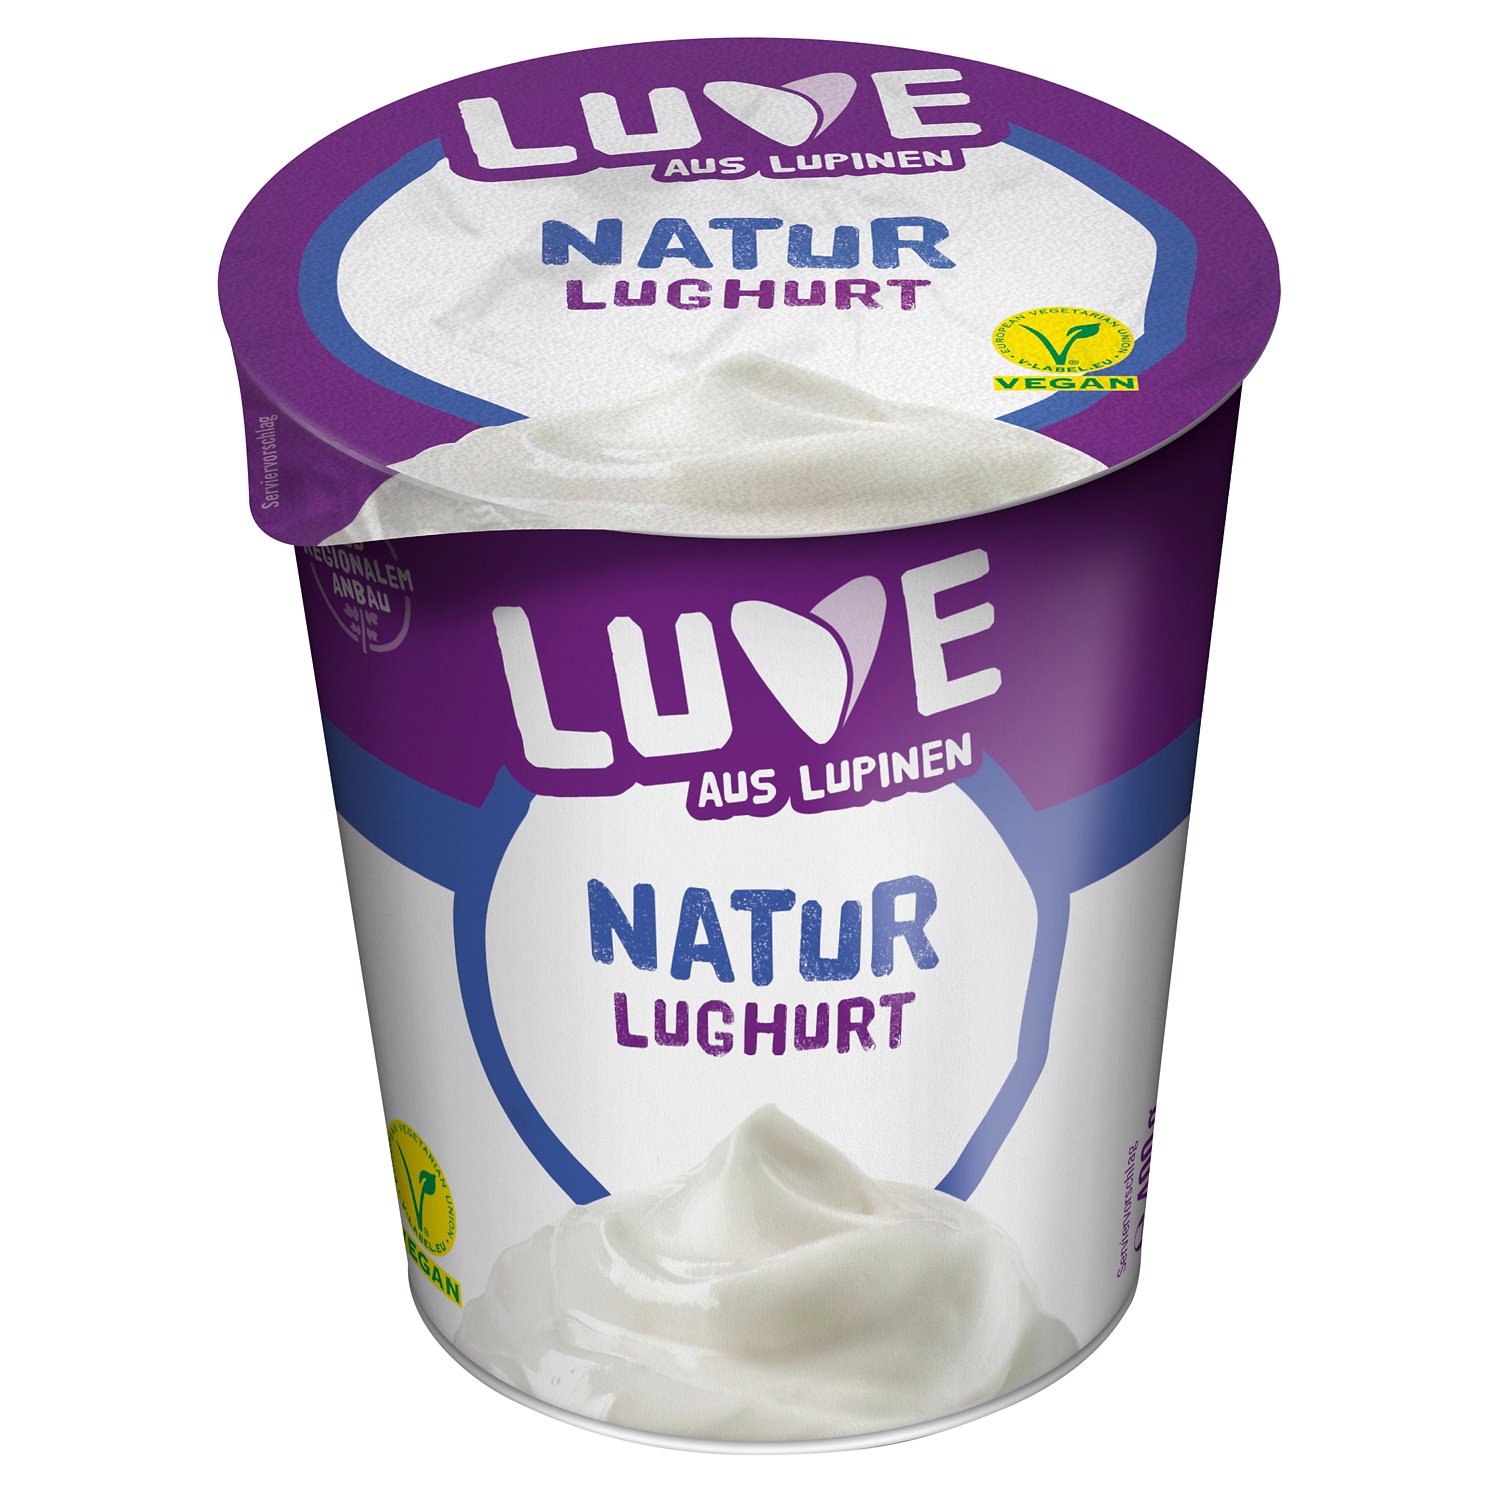 Made with luve Joghurt, Natur